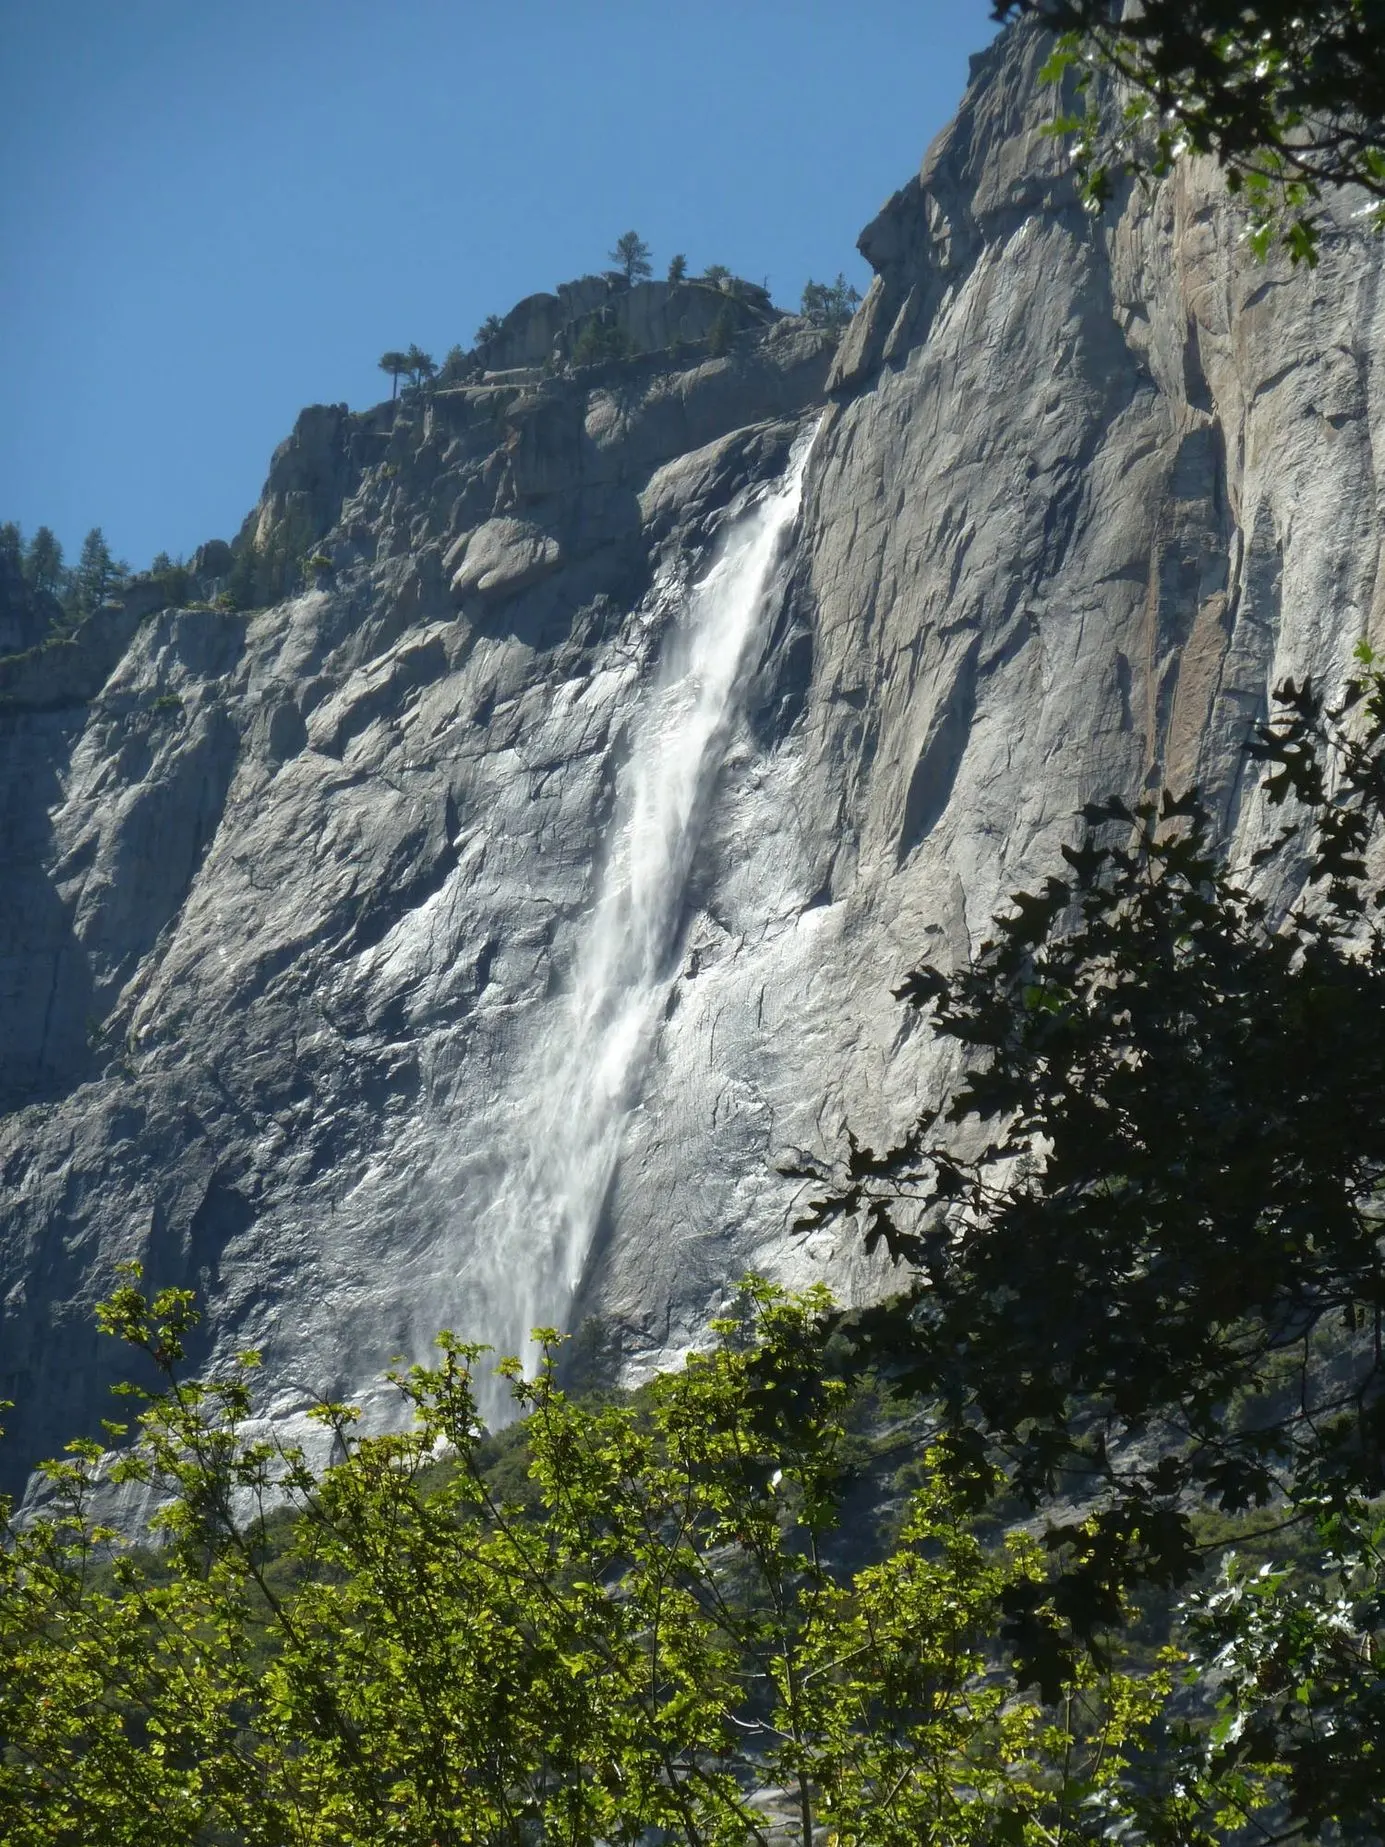 Waterfall from afar